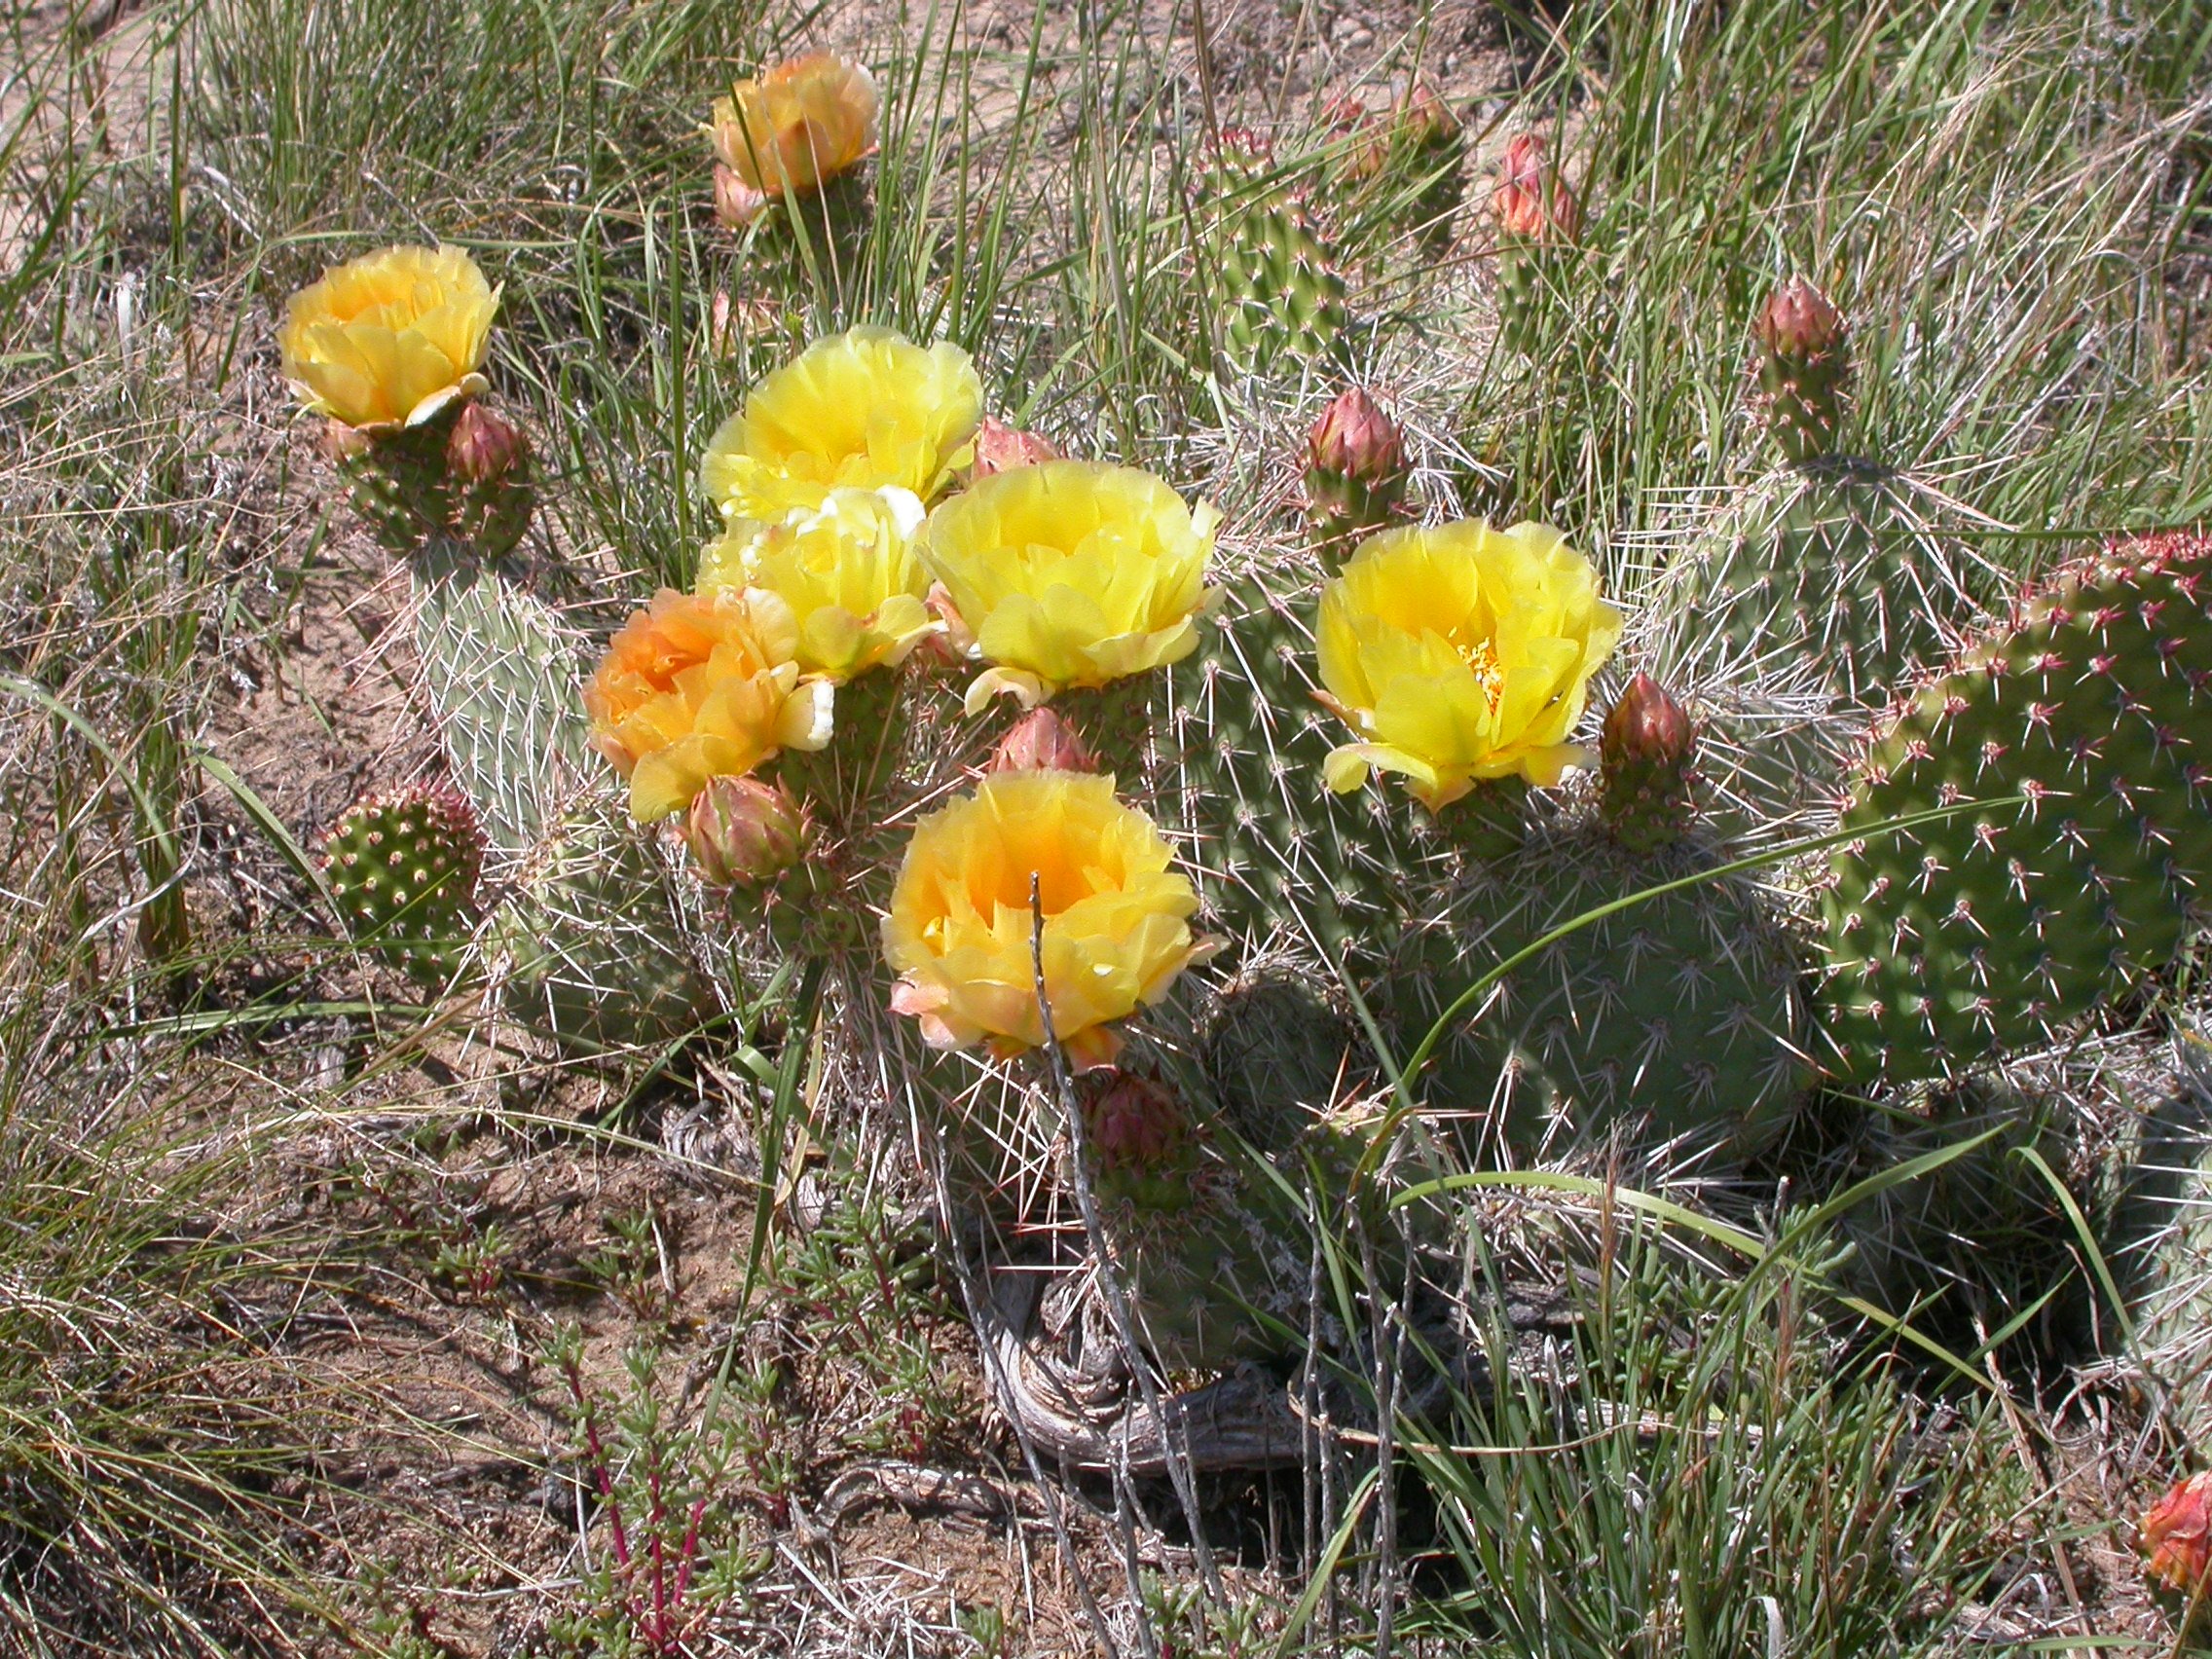 Plains Prickly Pear Cactus (Opuntia polyacantha)